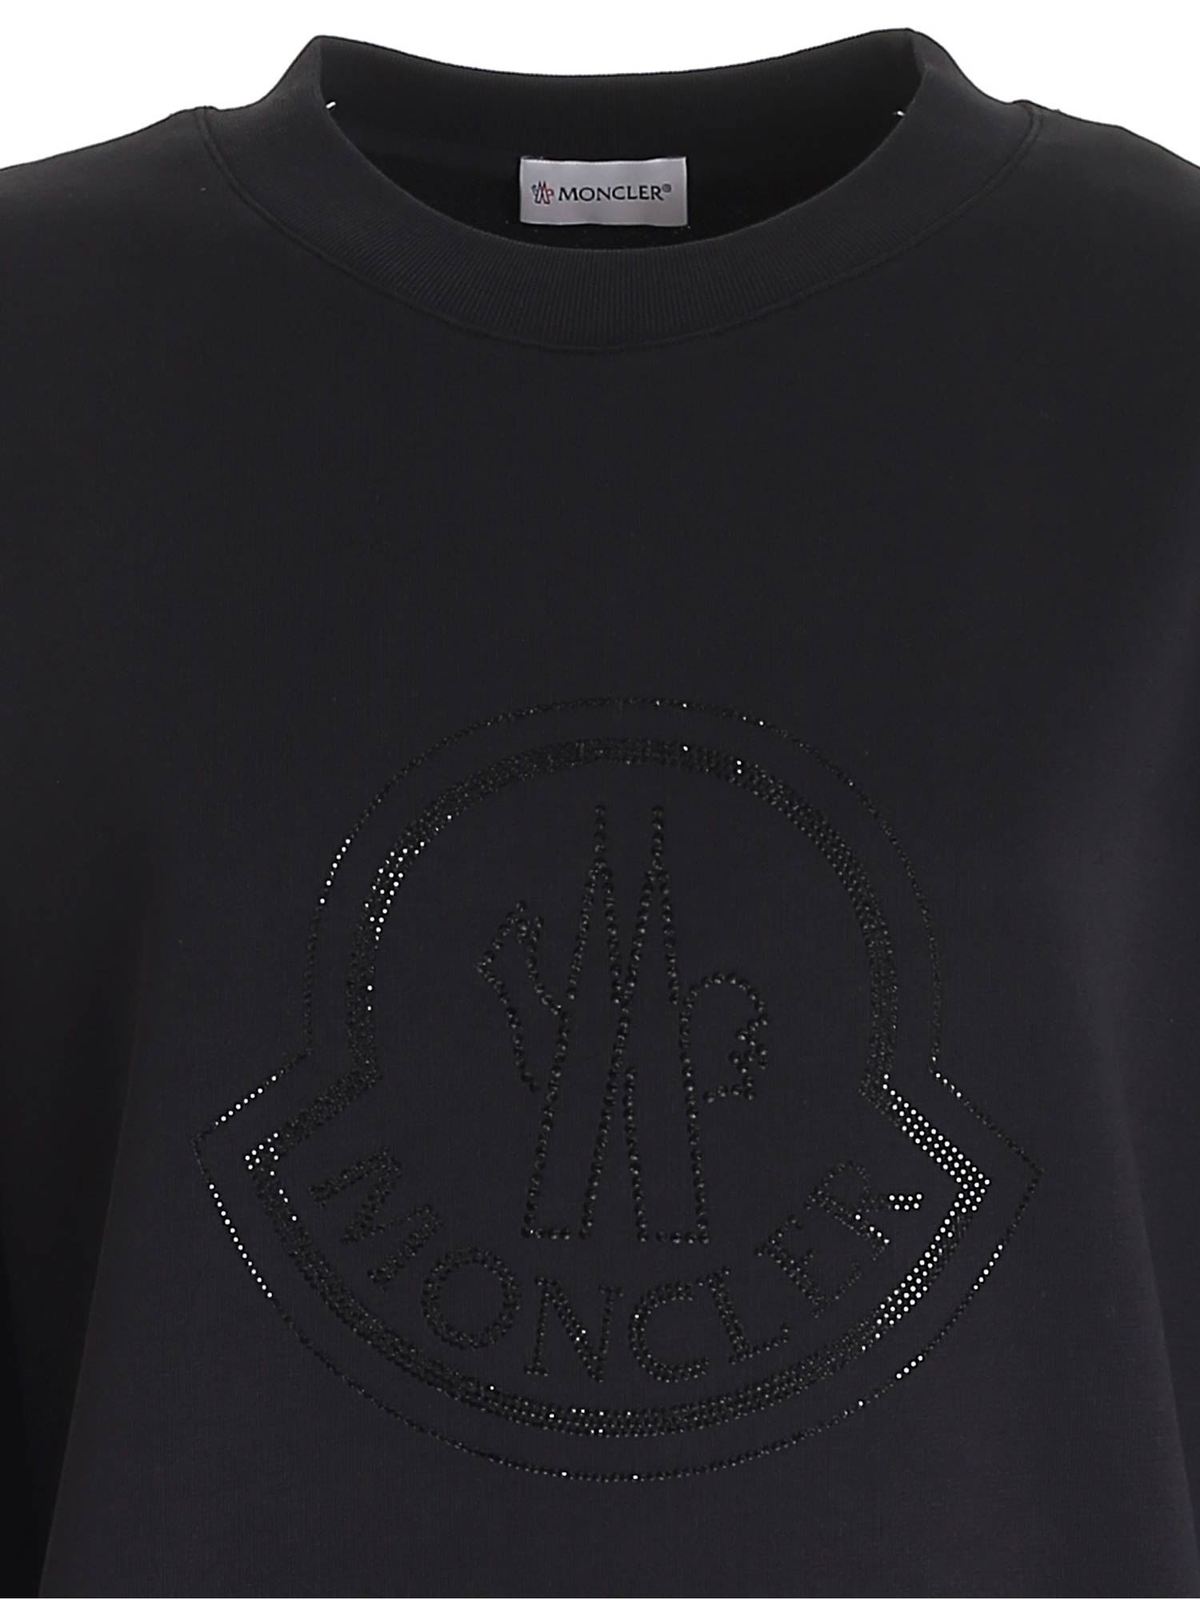 Rhinestone logo sweatshirt in black